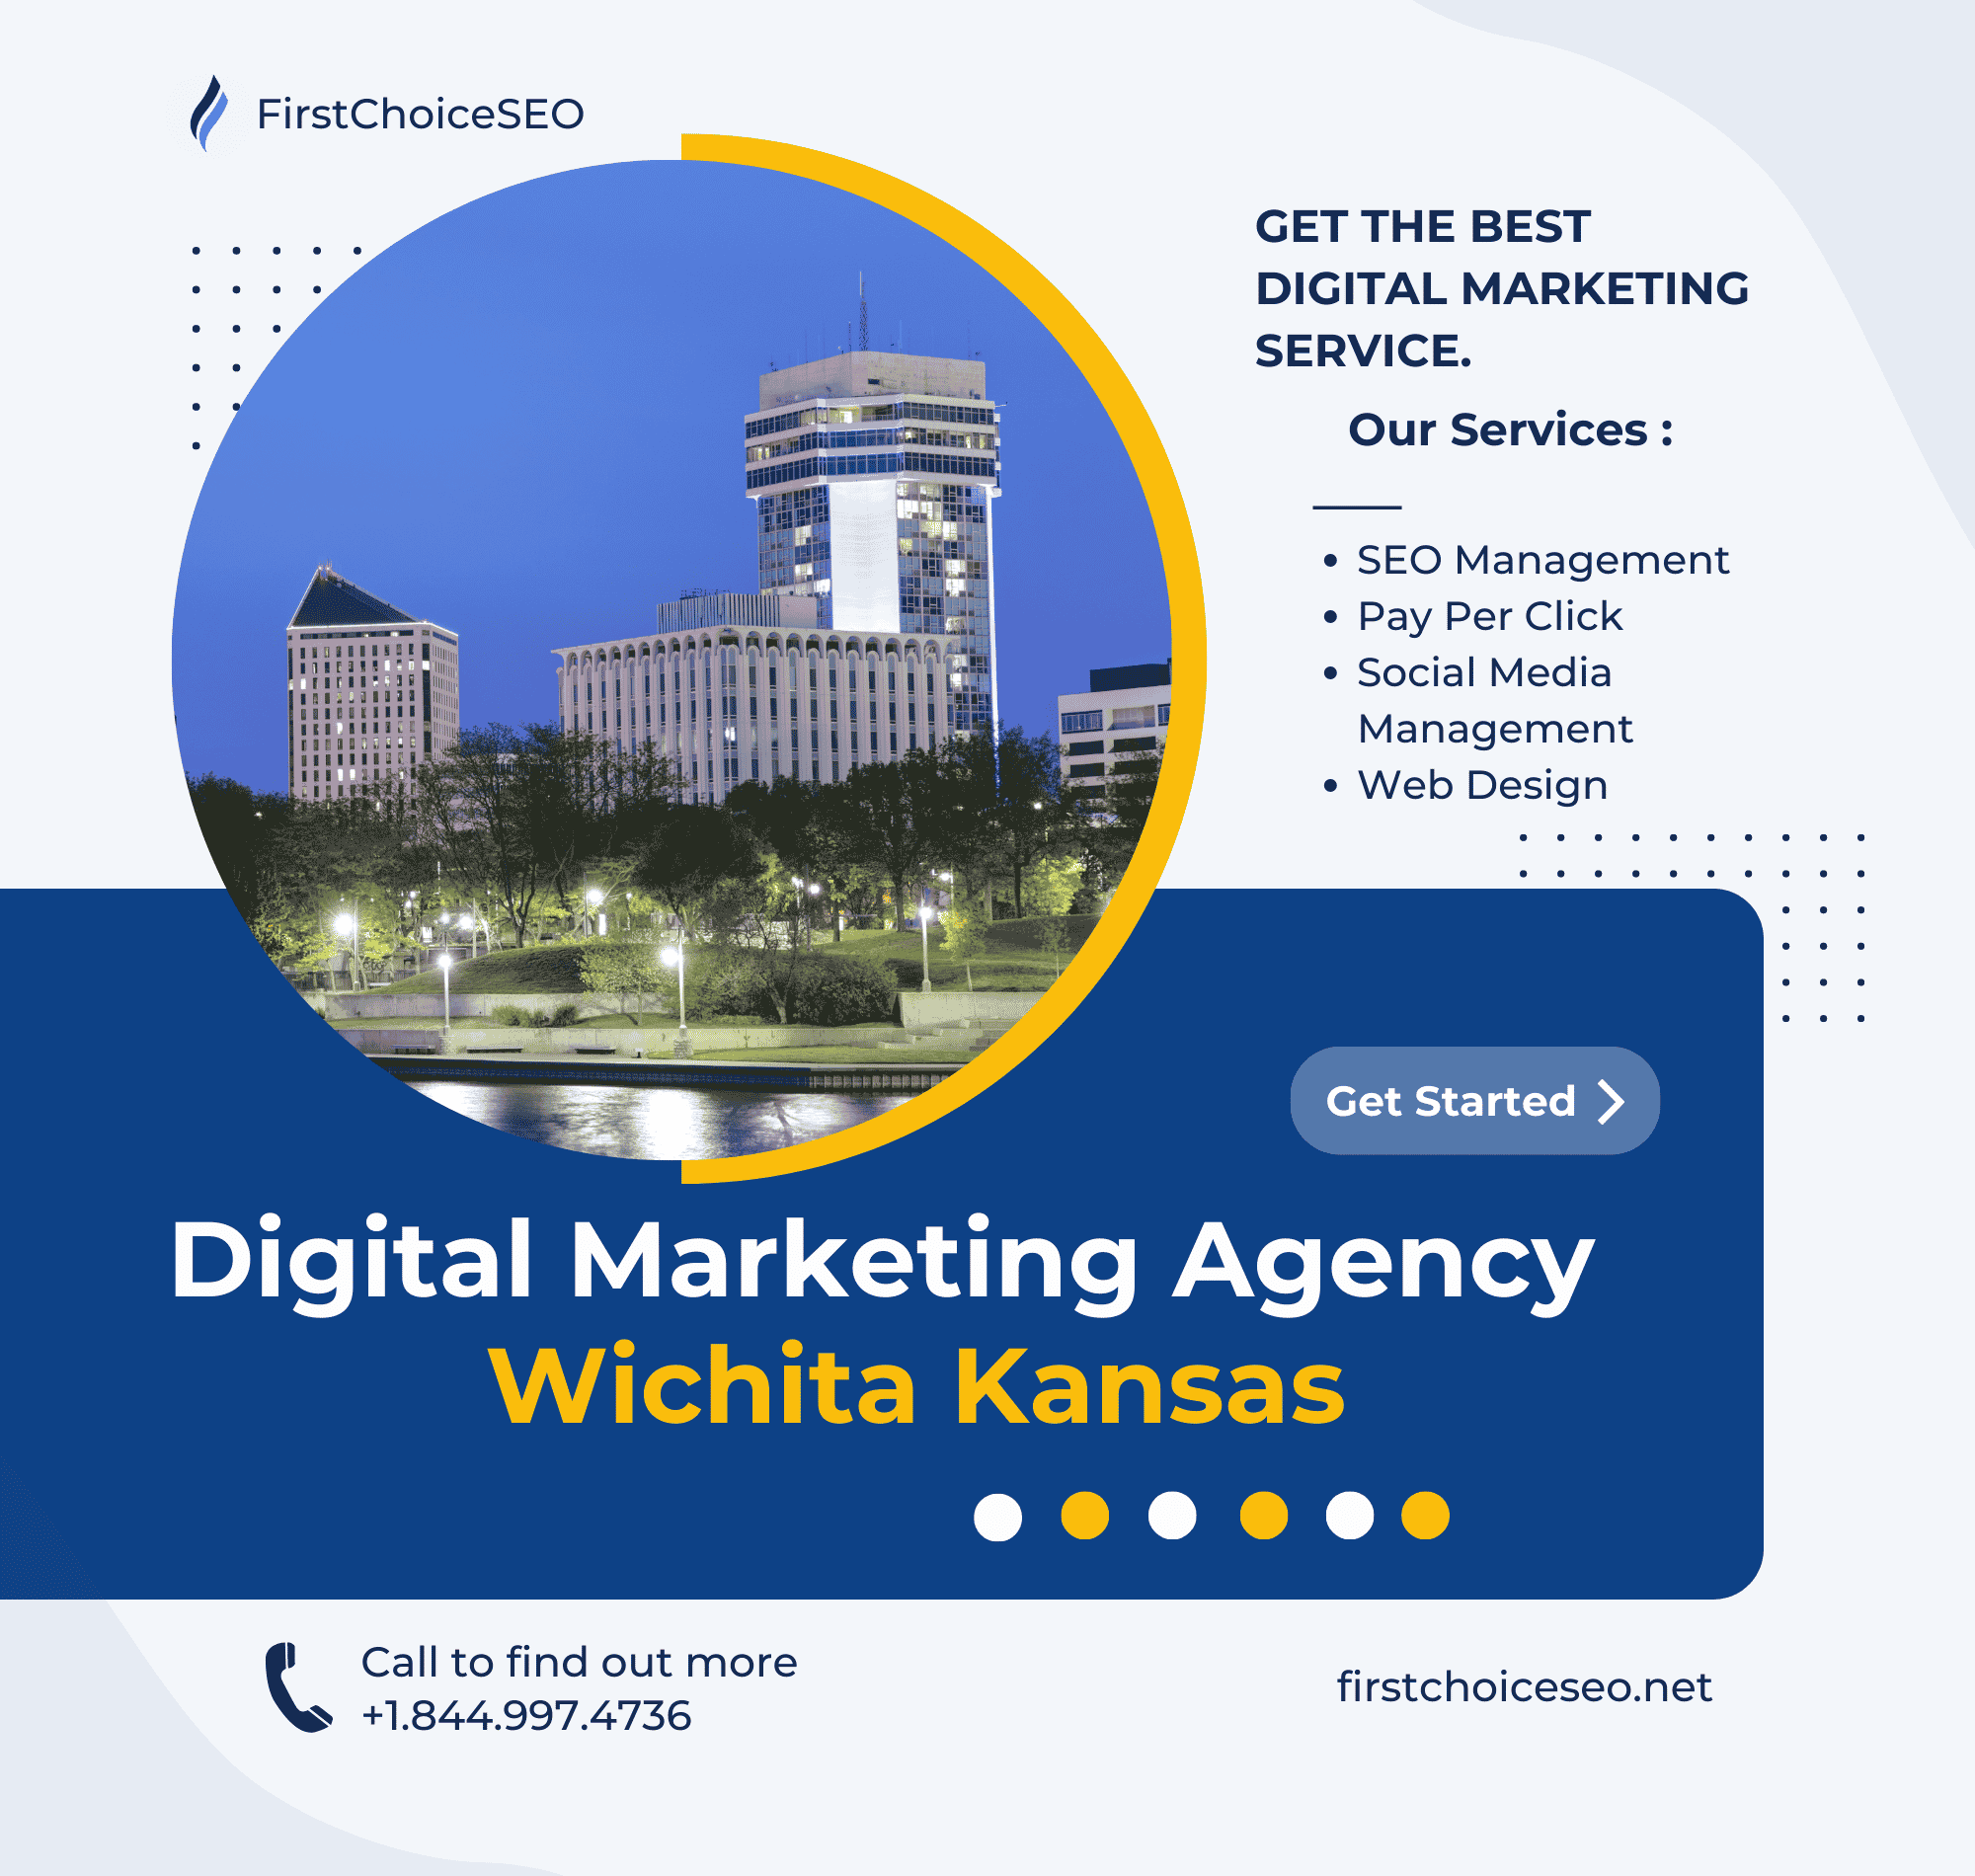 Digital Marketing Services in Wichita KS